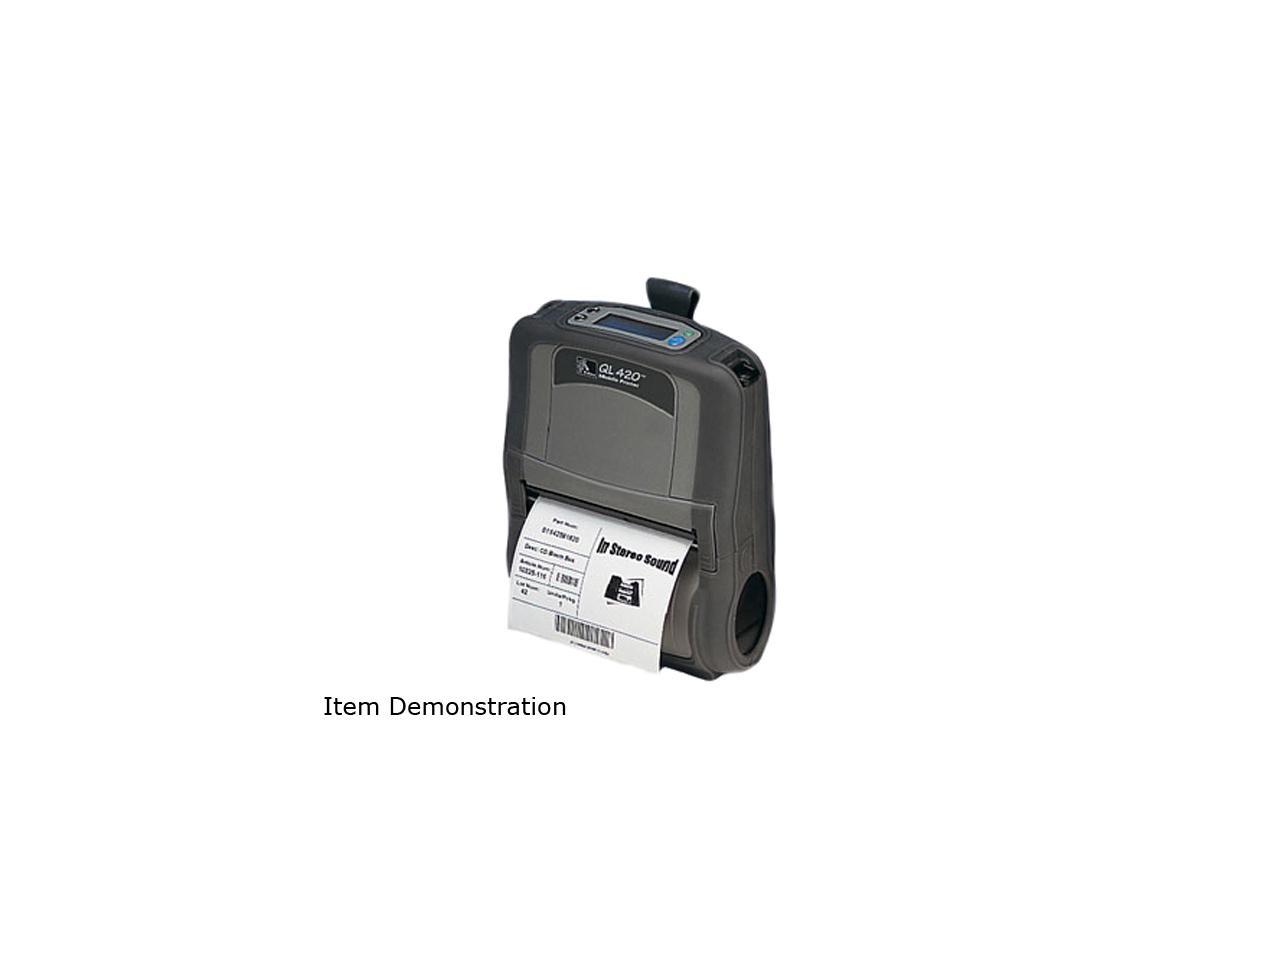 Zebra Ql 420 Plus Direct Thermal Printer Monochrome Mobile Label Print 1165